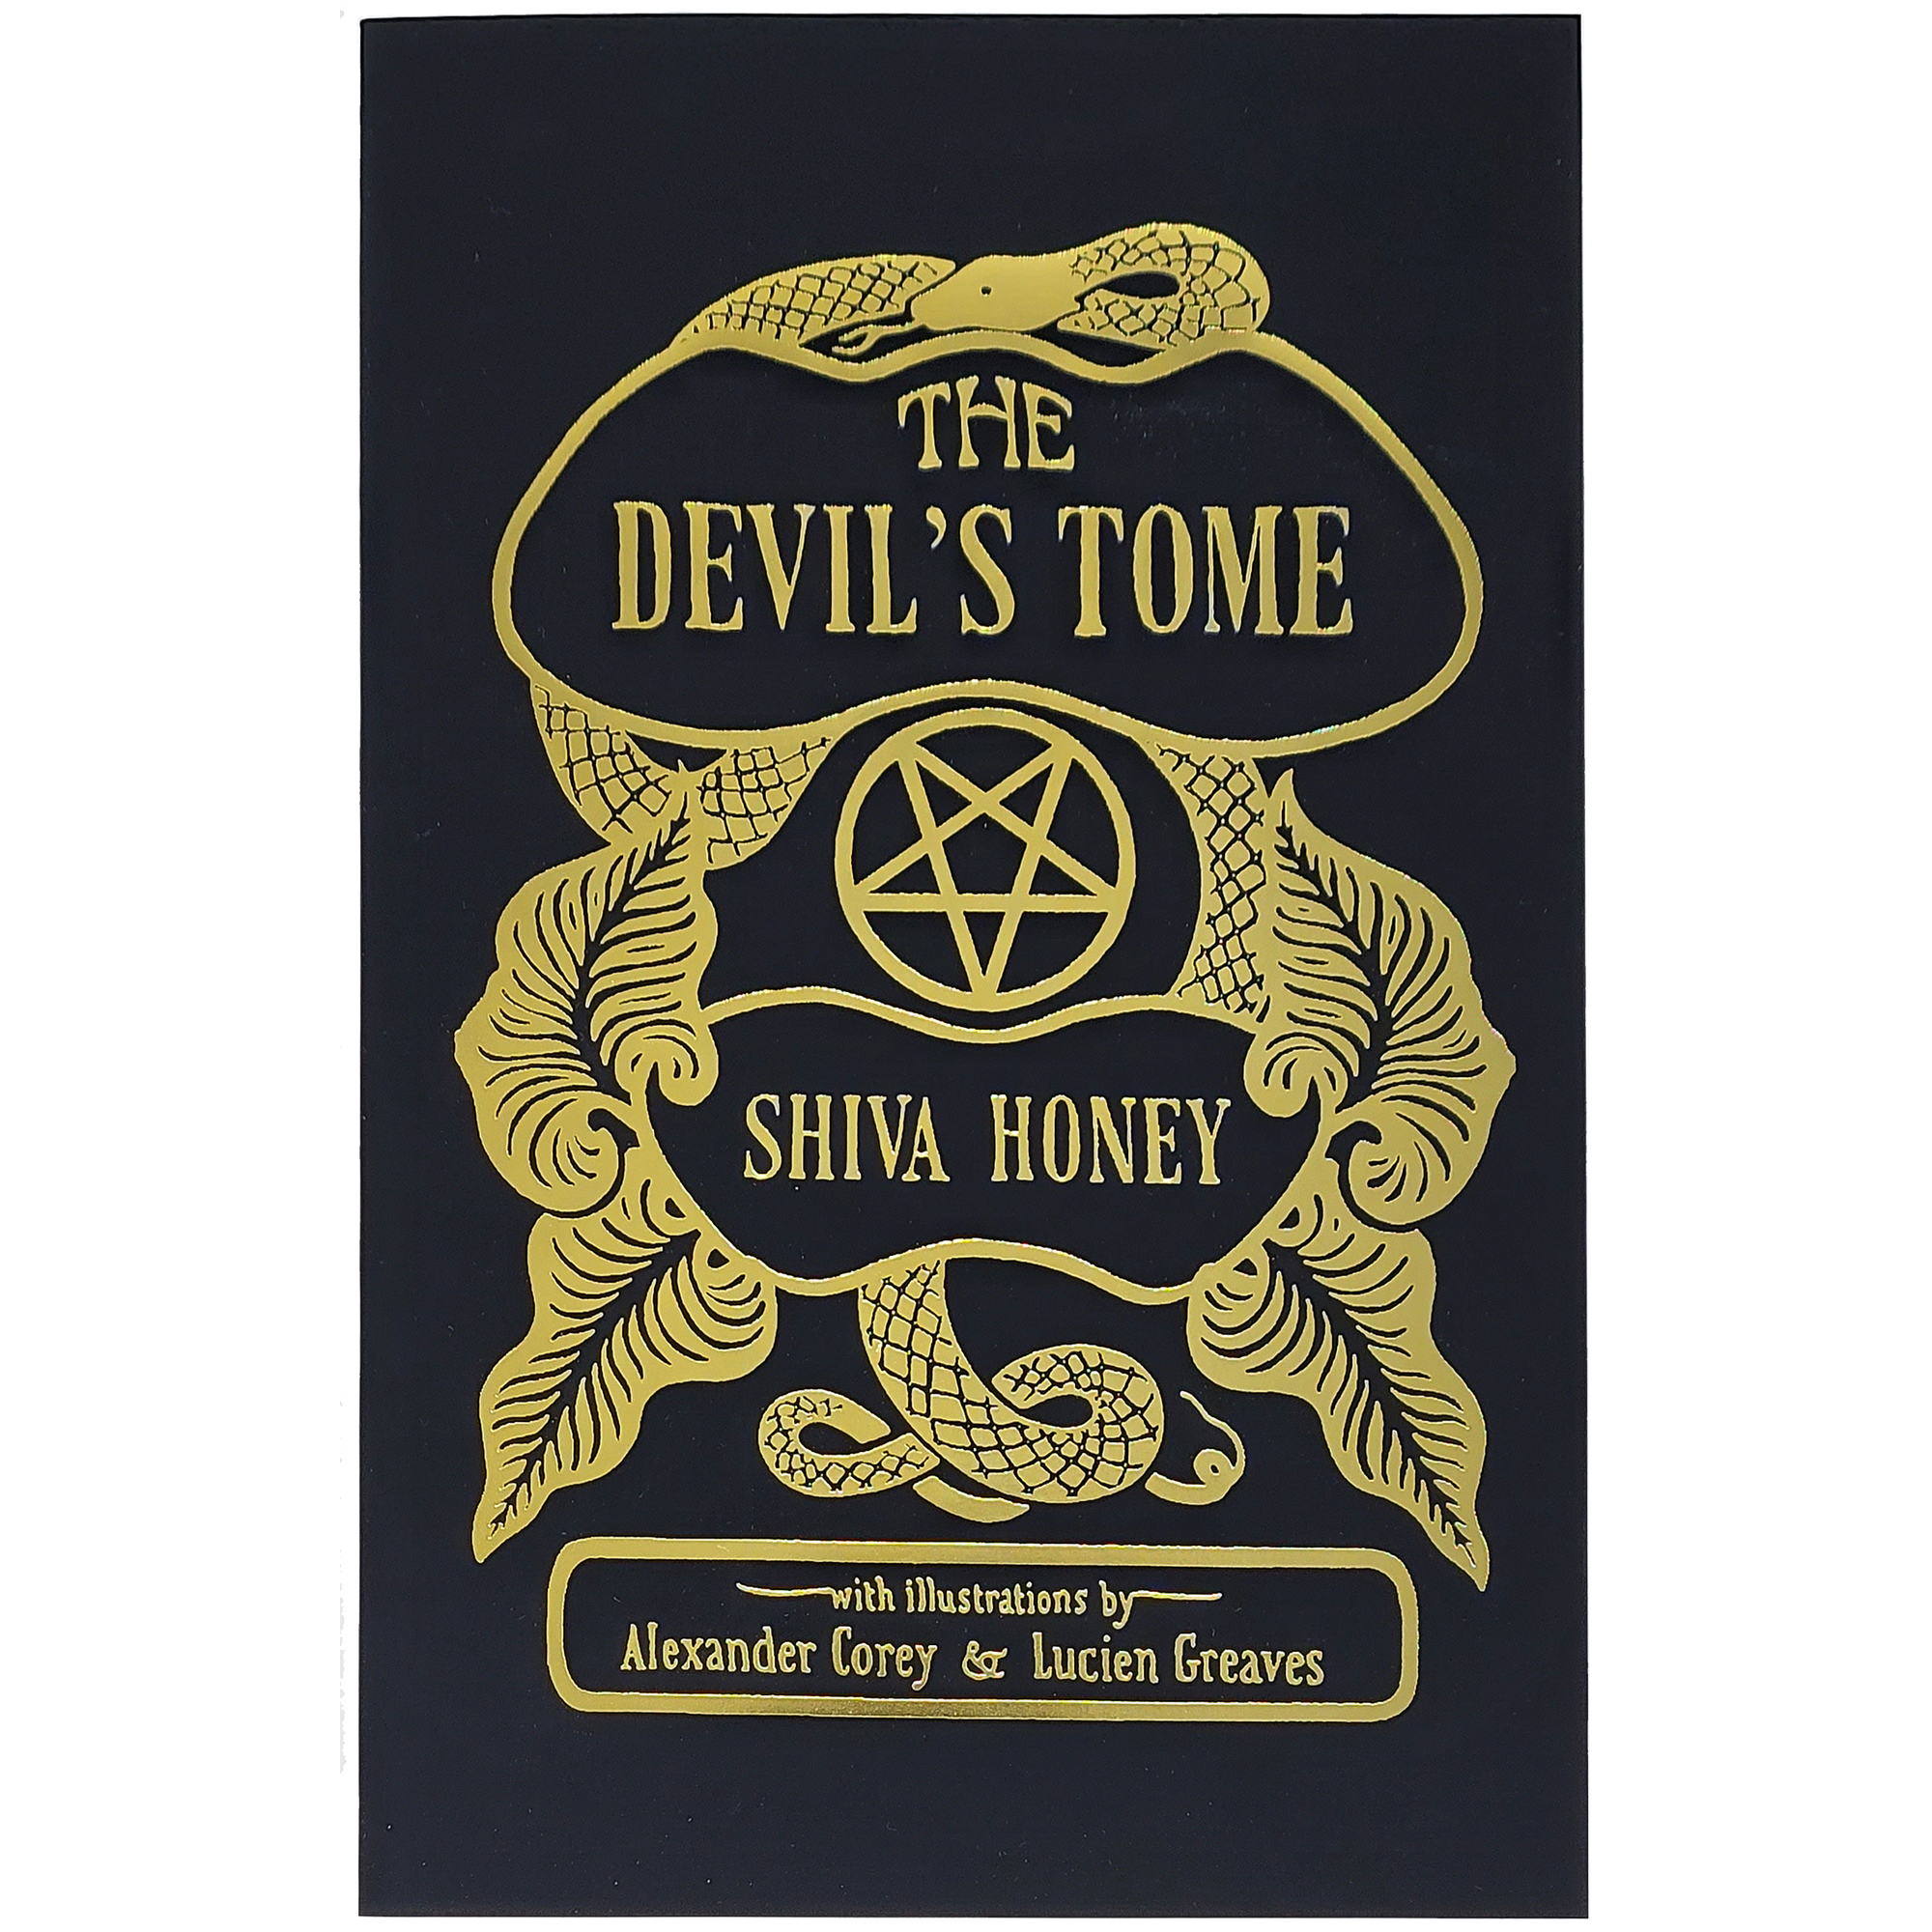 The Devil’s Tome: A Book of Modern Satanic Ritual